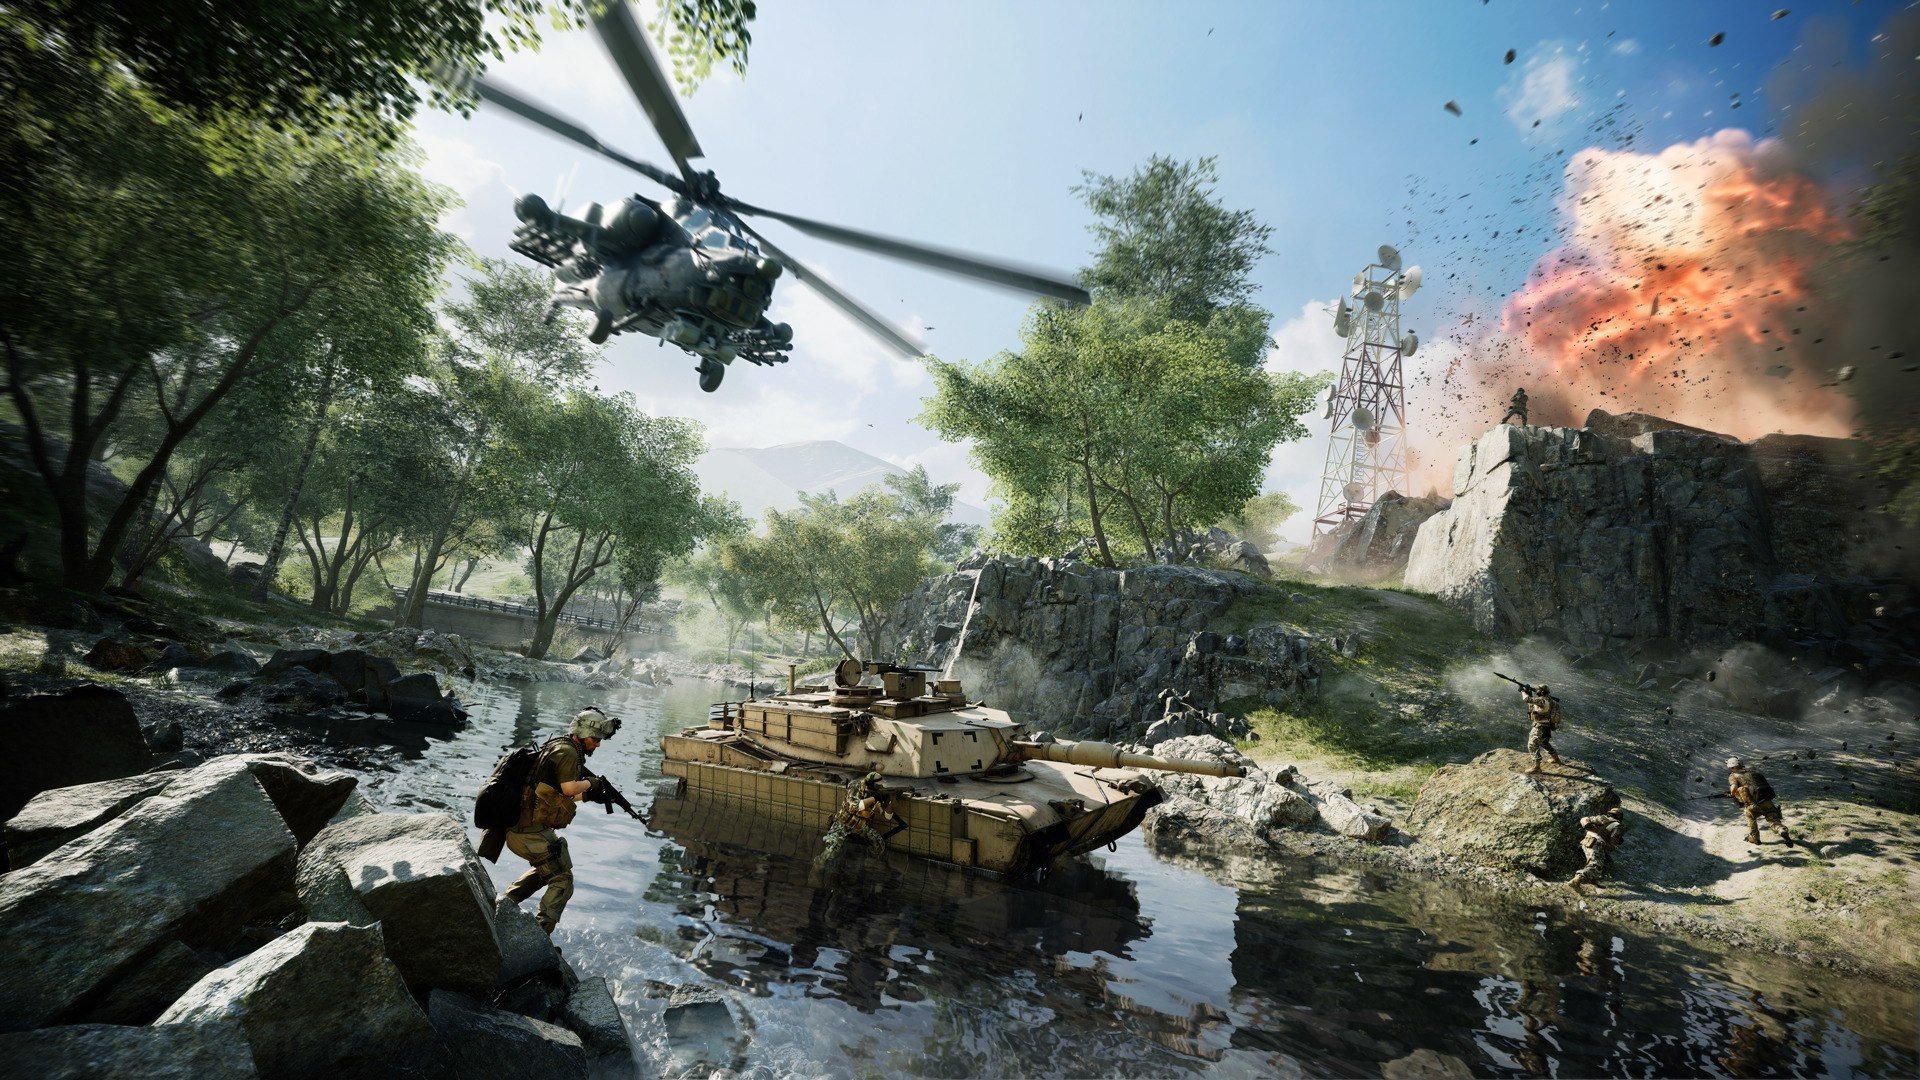 Скриншот Battlefield 2042 Ultimate Edition + Подарки 🎁